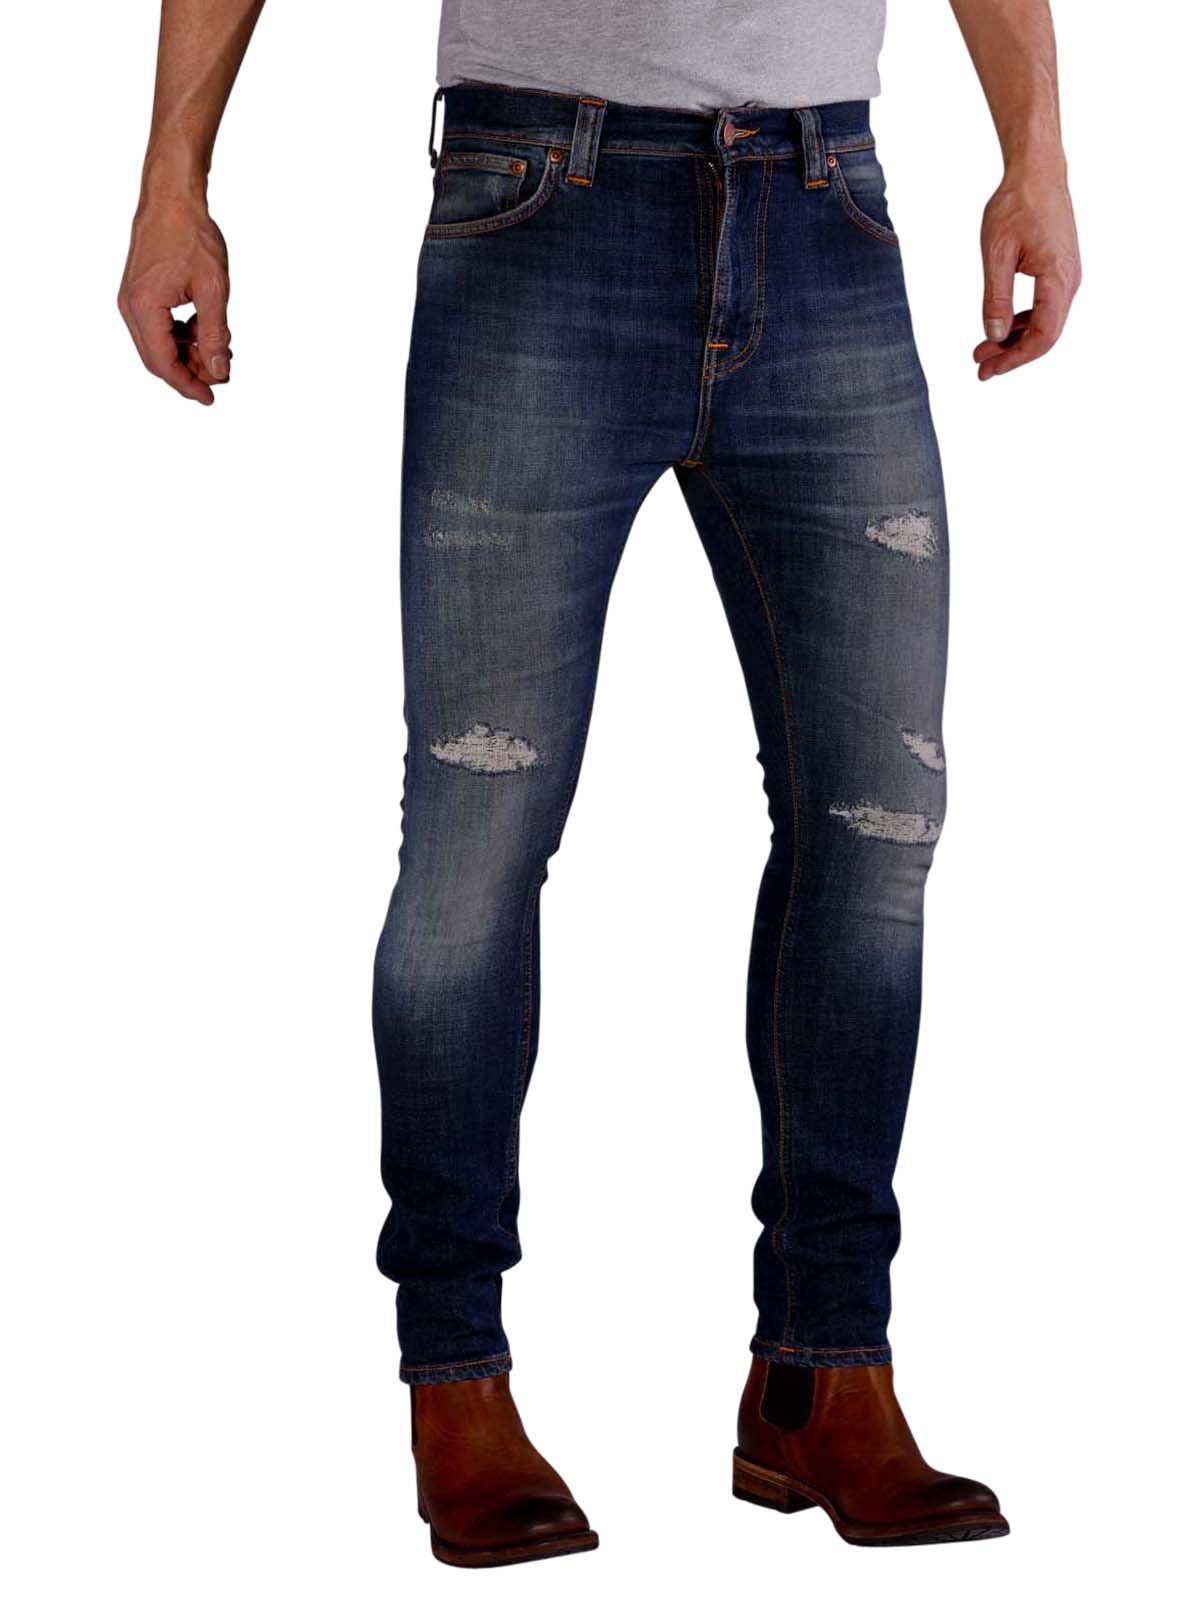 brute knut jeans